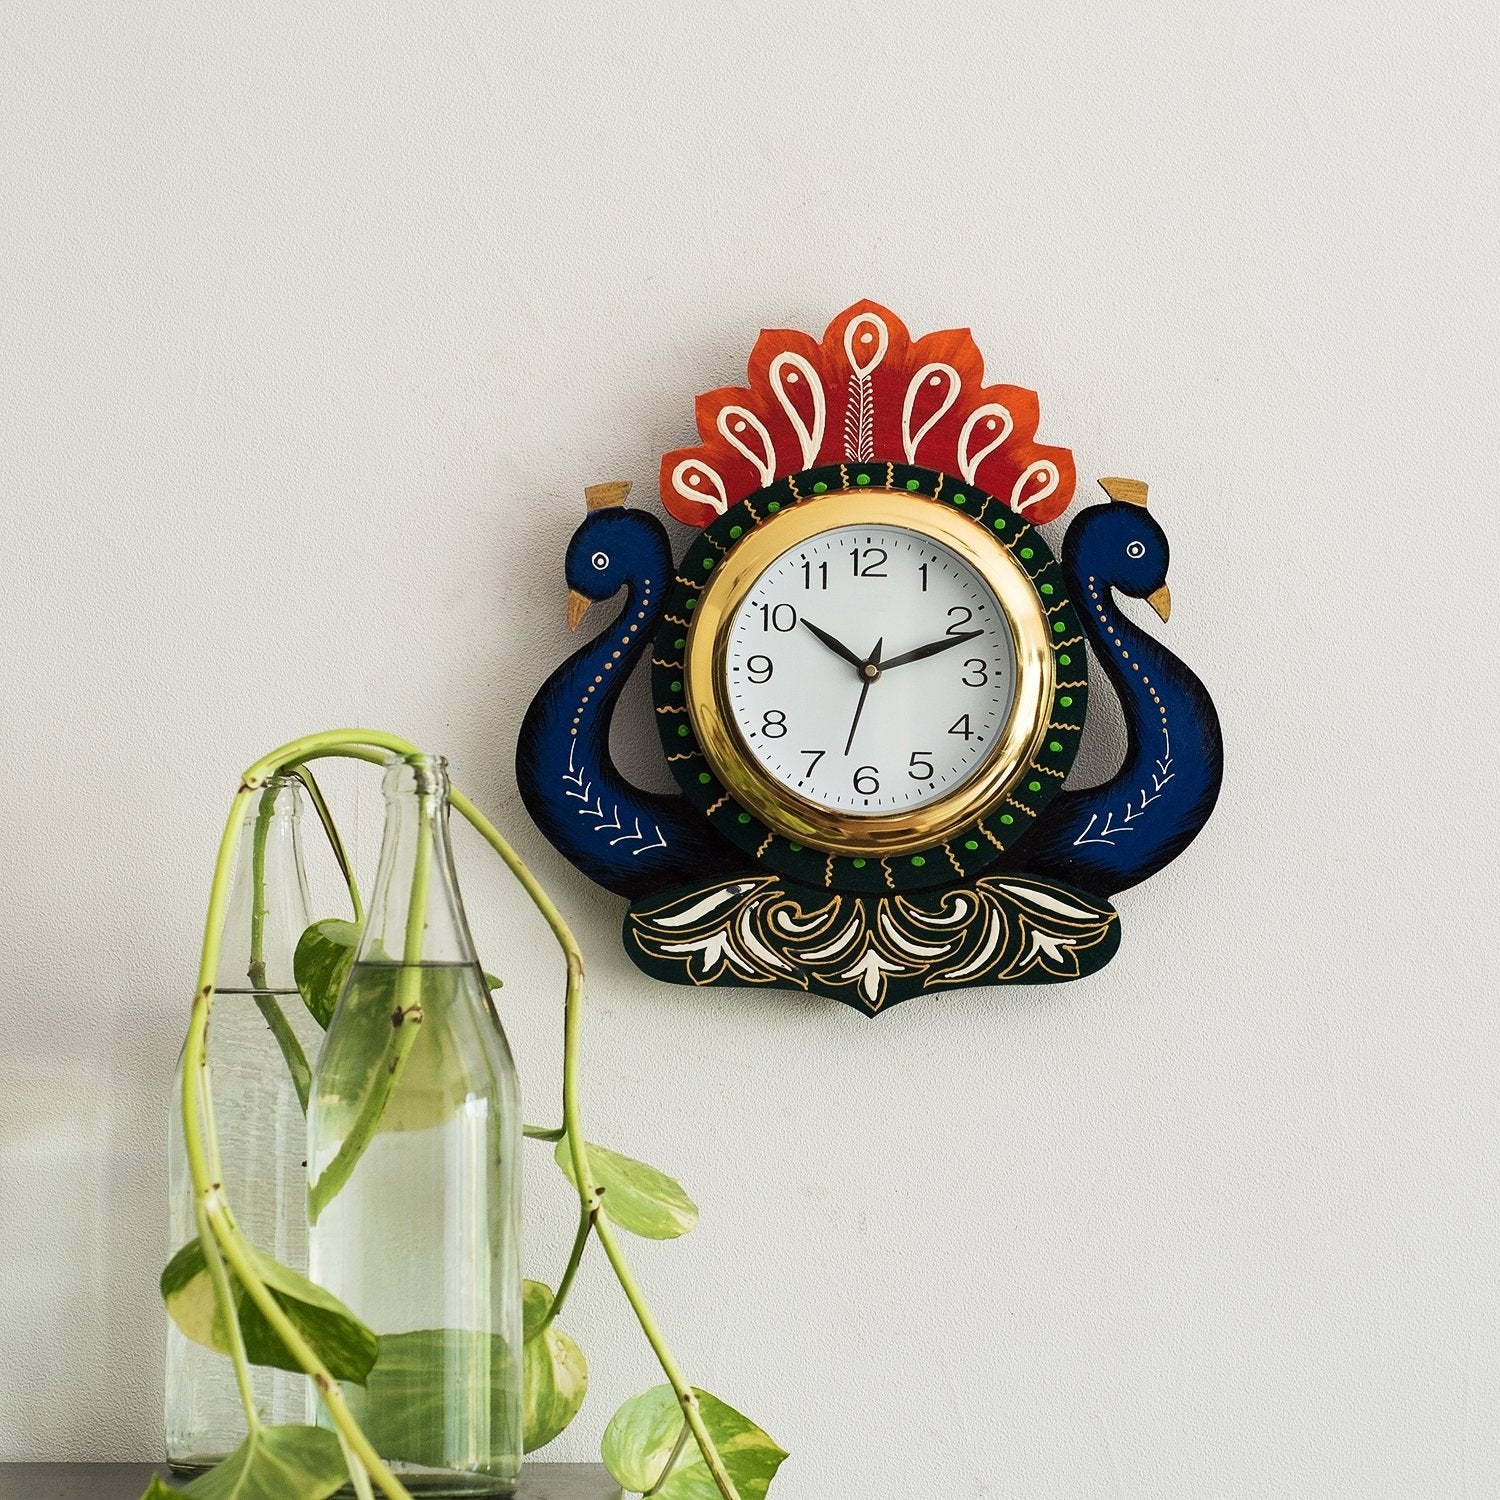 Handcrafted Papier-Mache 2 Peacocks Decorative Wall Clock 3